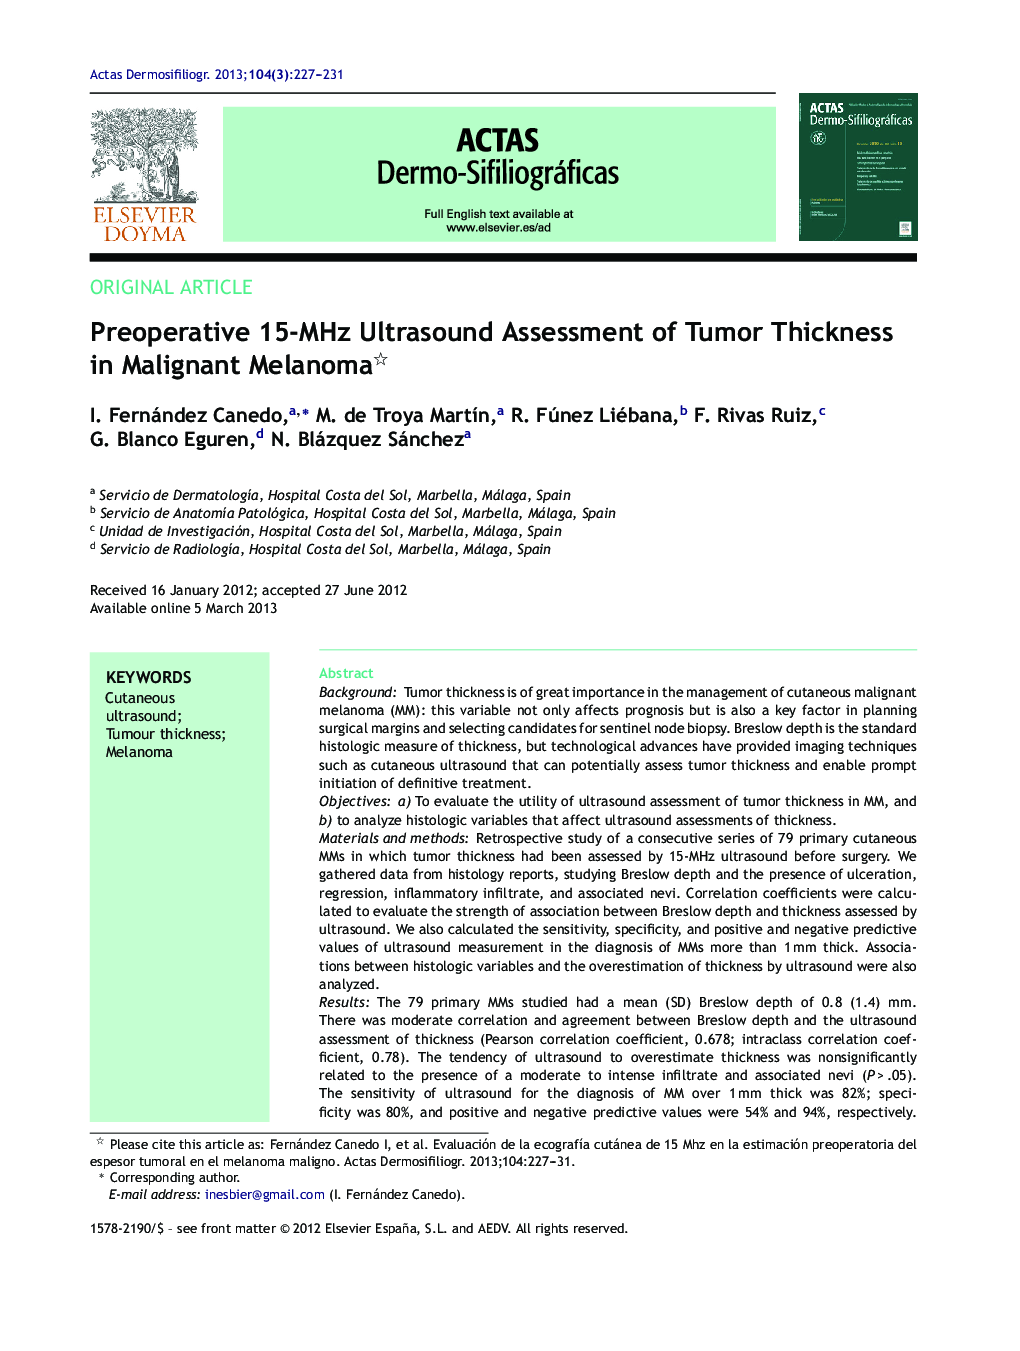 Preoperative 15-MHz Ultrasound Assessment of Tumor Thickness in Malignant Melanoma